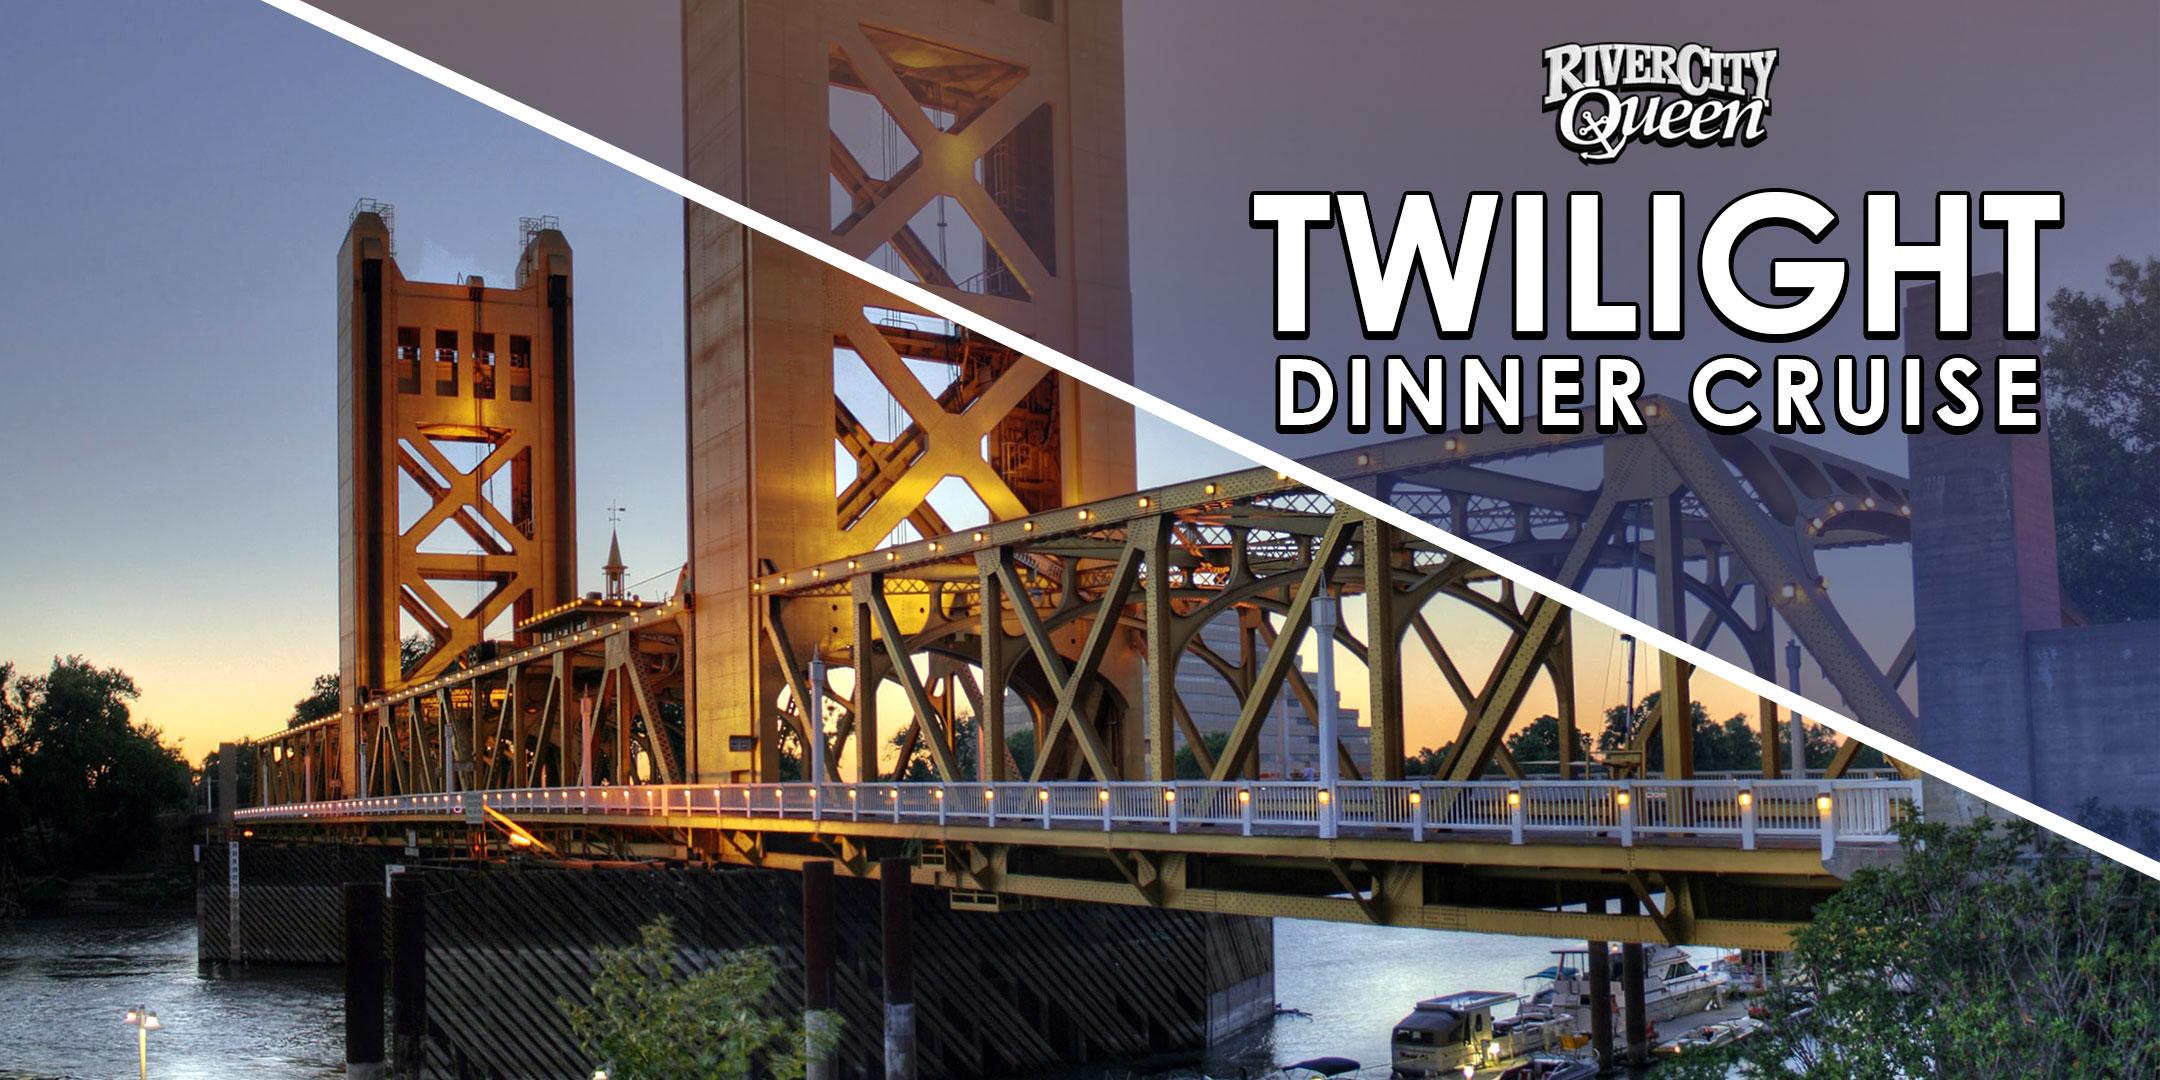 LEAP YEAR TWILIGHT DINNER CRUISE - River City Queen - Sacramento